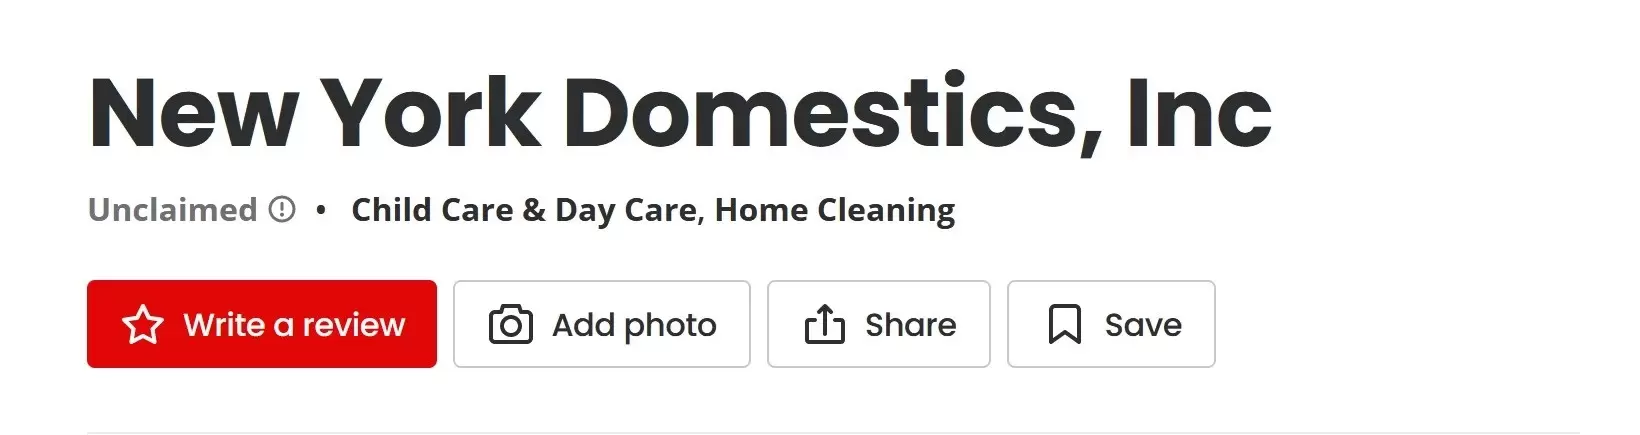 New York Domestics Inc company profile and reviews